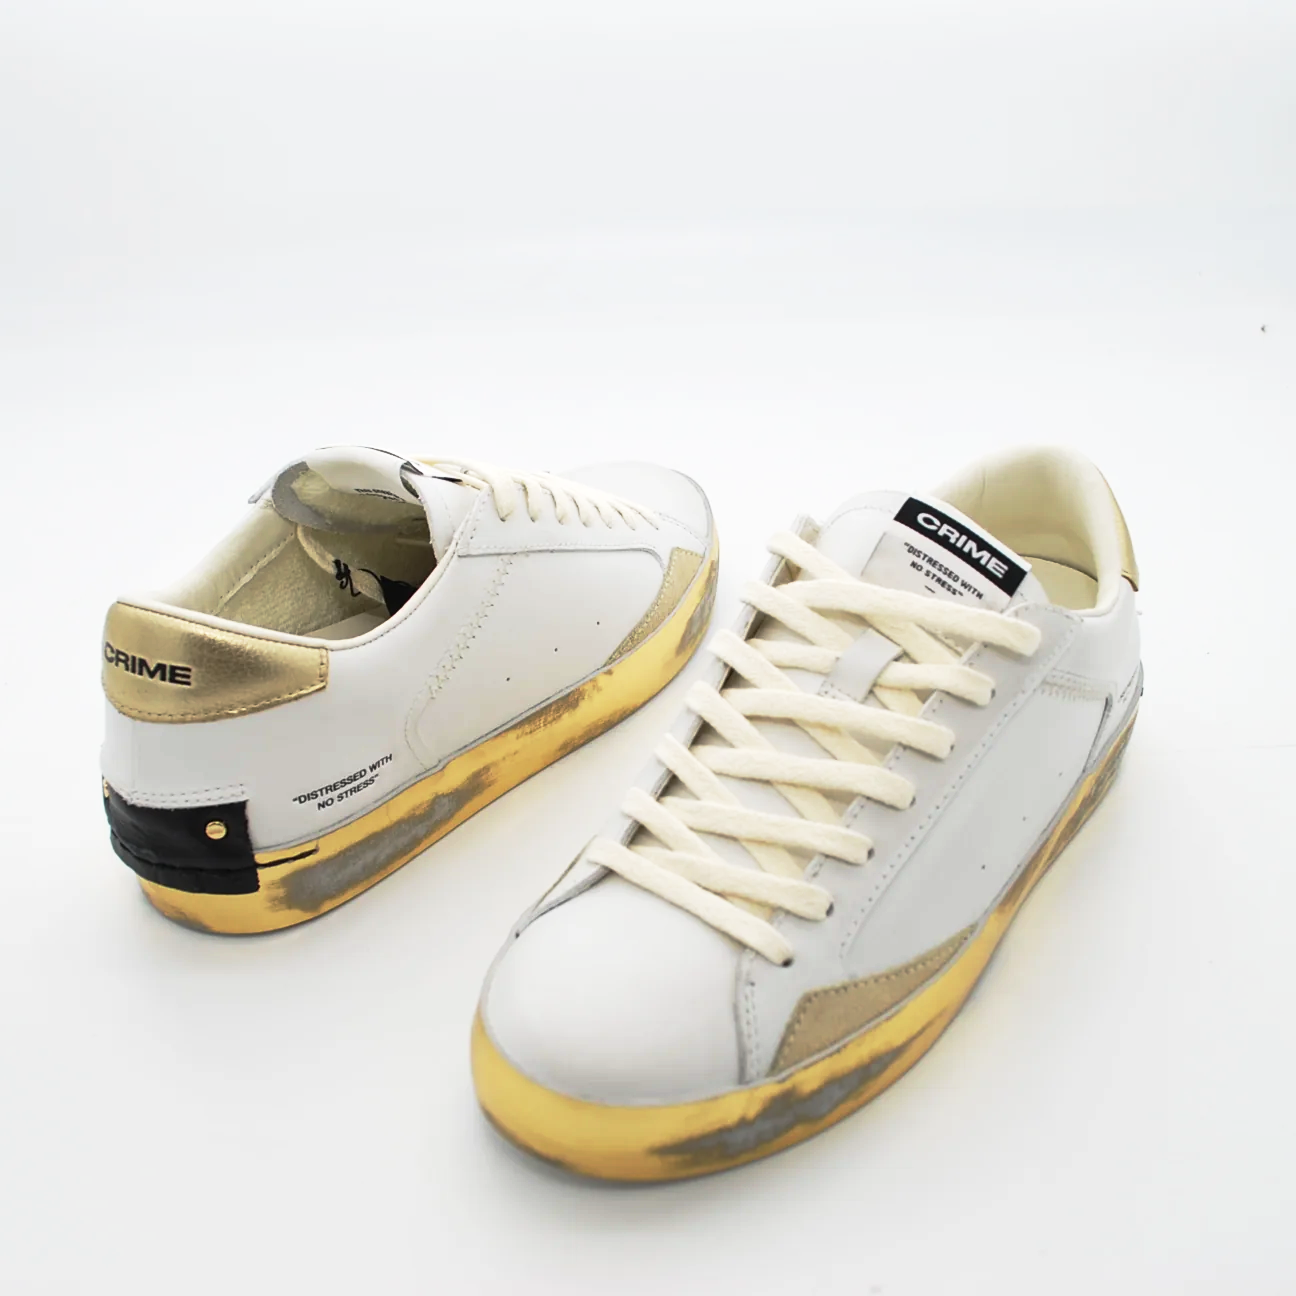 Sneakers Crime London distressed metallic gold